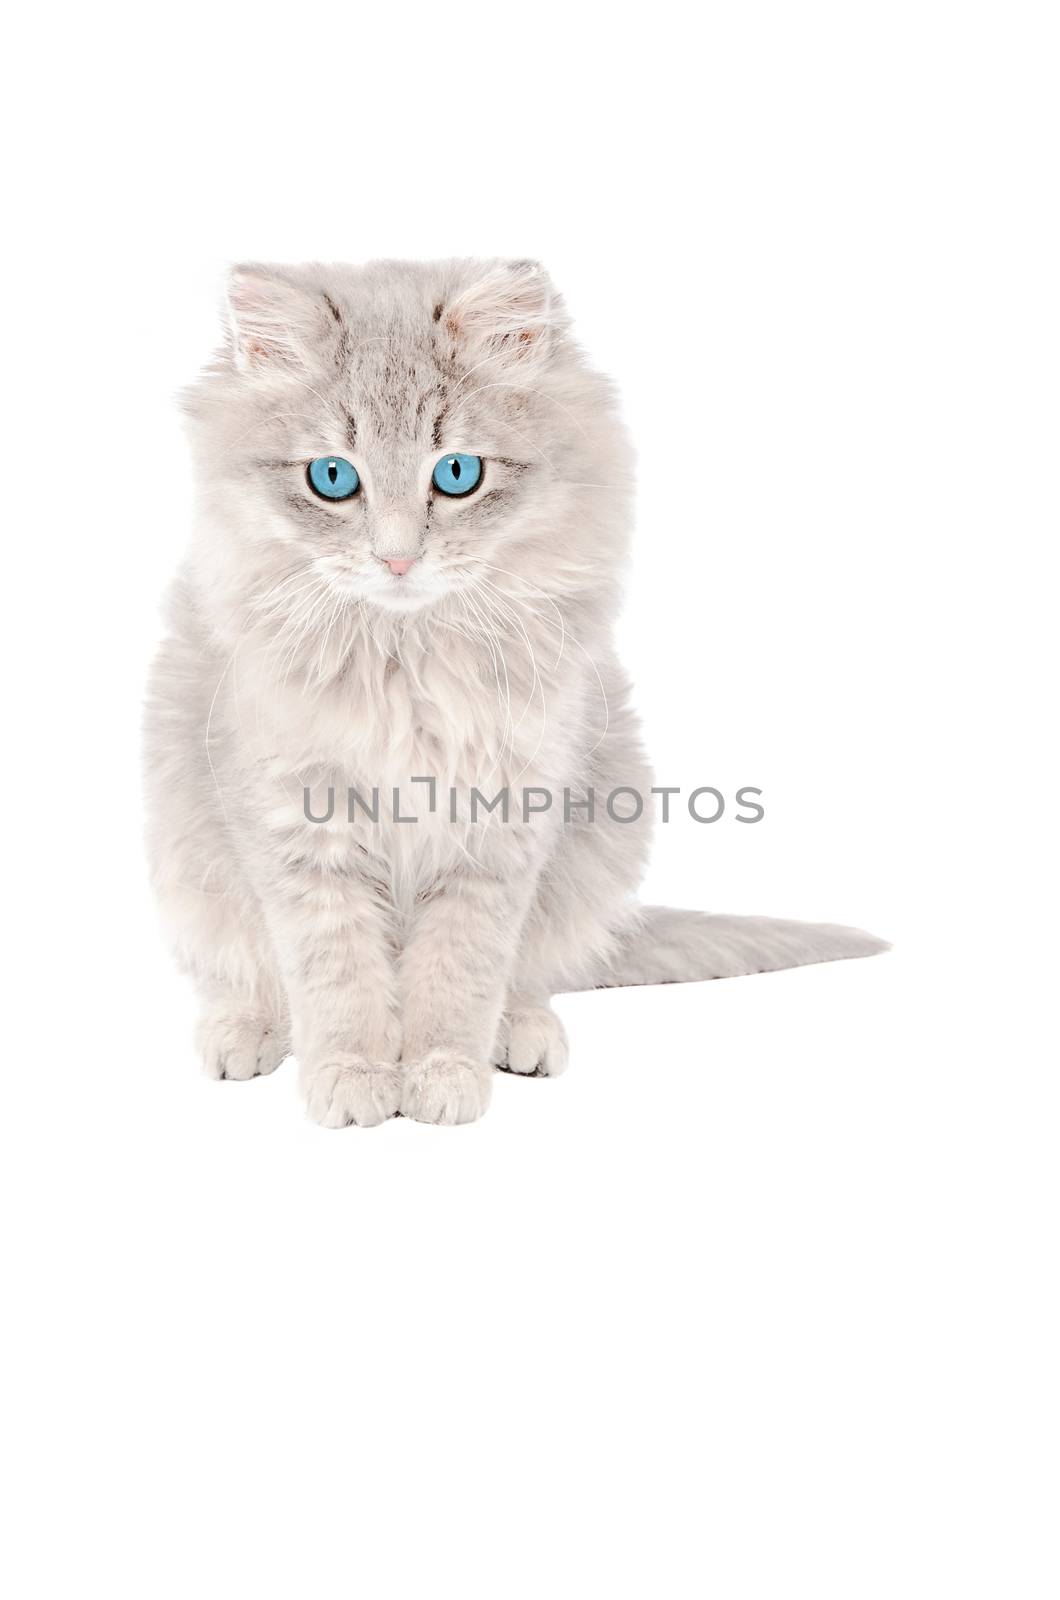 Sad fluffy grey kitten with blue eyes